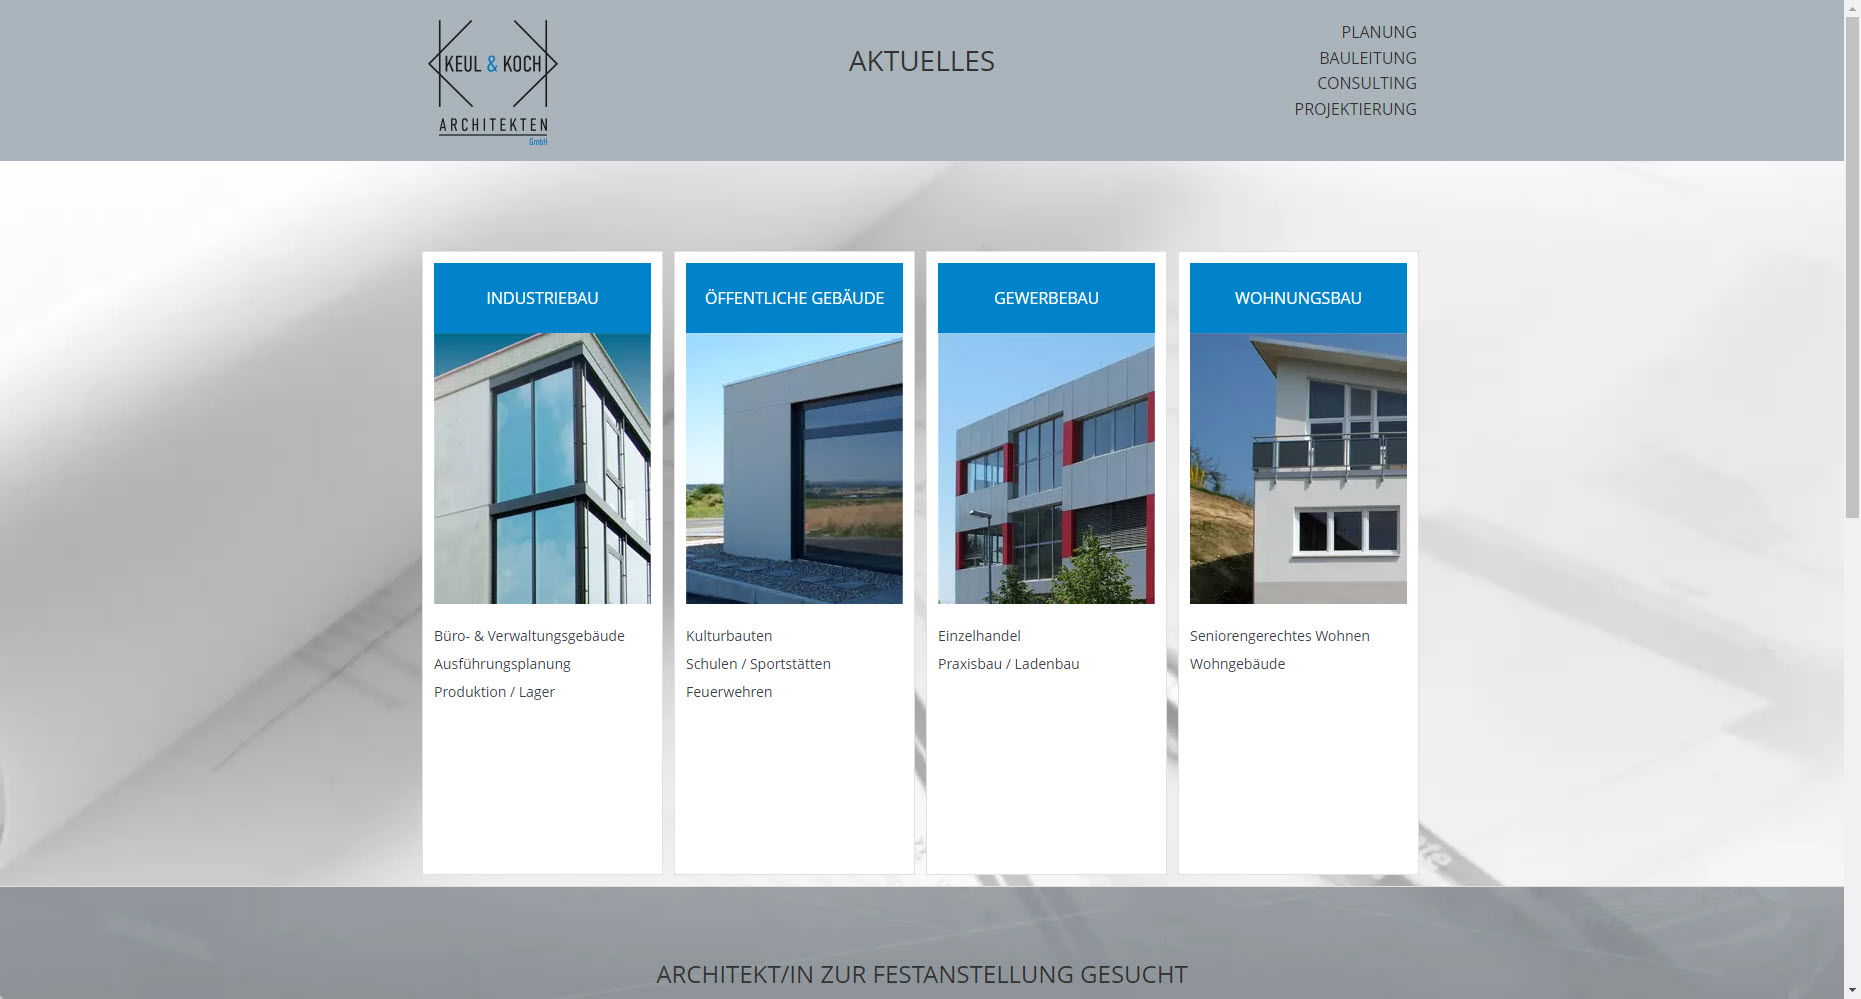 Keul & Koch Architekten GmbH